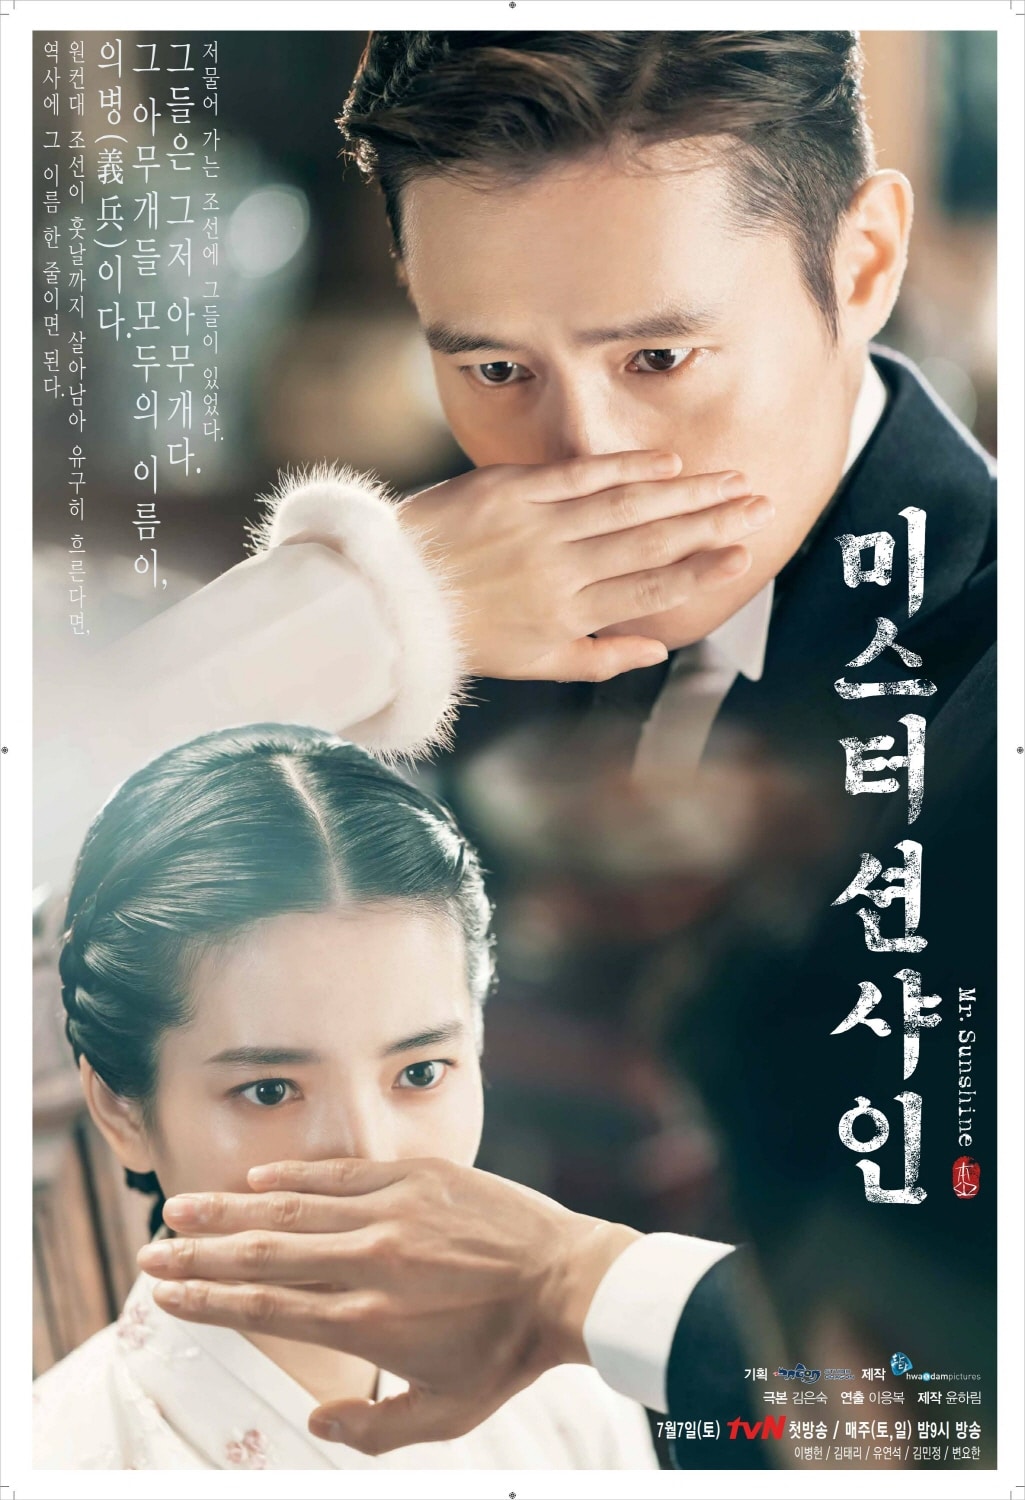 2018 Mr. Sunshine مشاهدة الدراما الكورية "السيد المشرق". تقرير عن الدراما +الأبطال+ حلقات مترجمة أونلاين وبجودة عالية . مسلسل السيد المشرق مترجم.